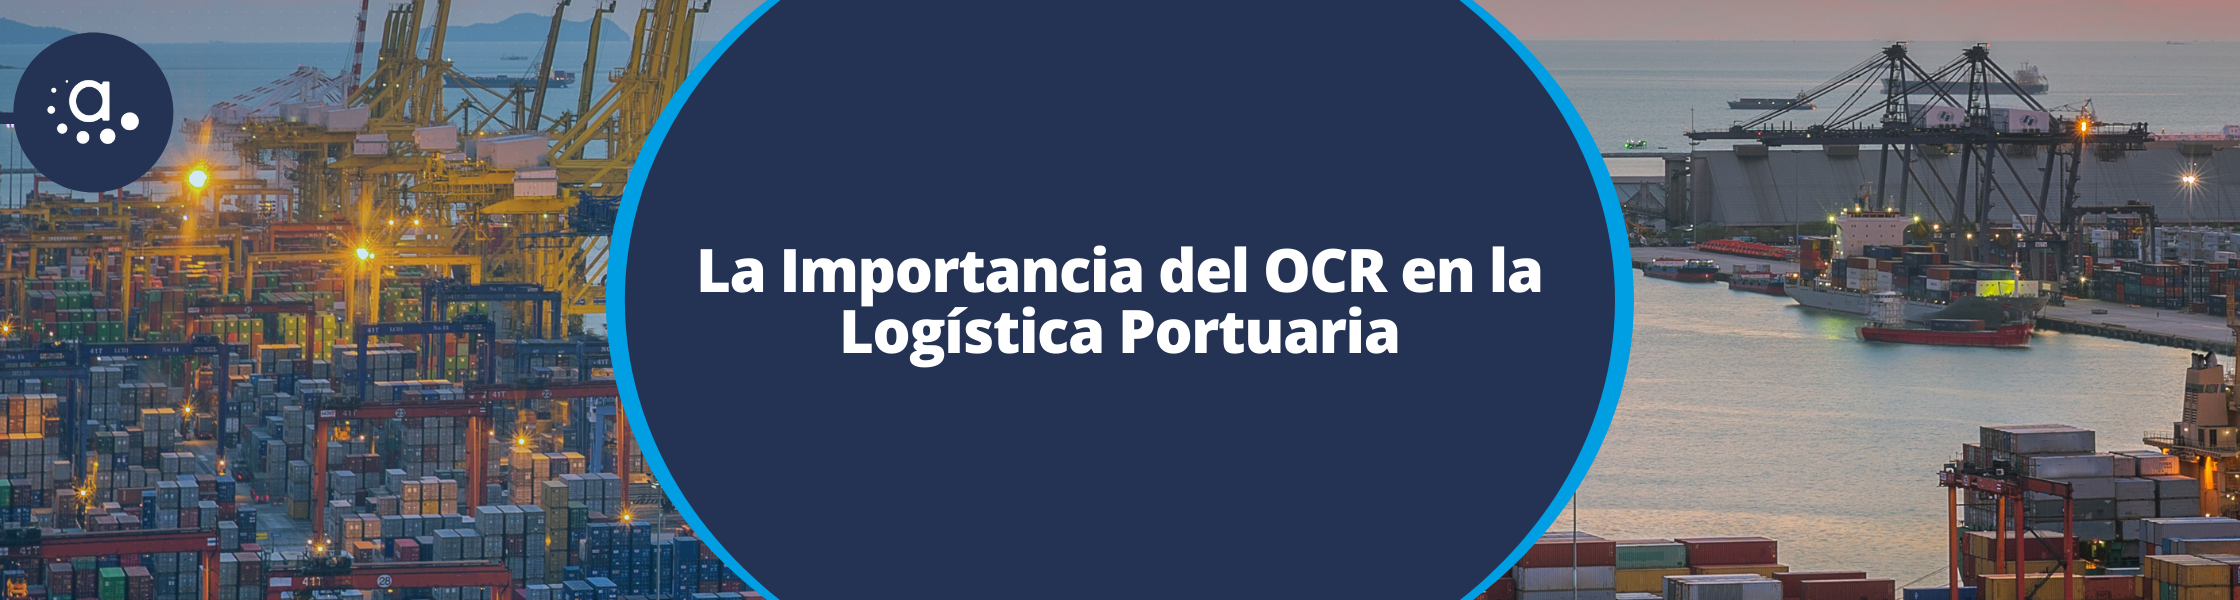 La importancia del OCR en la Logística Portuaria